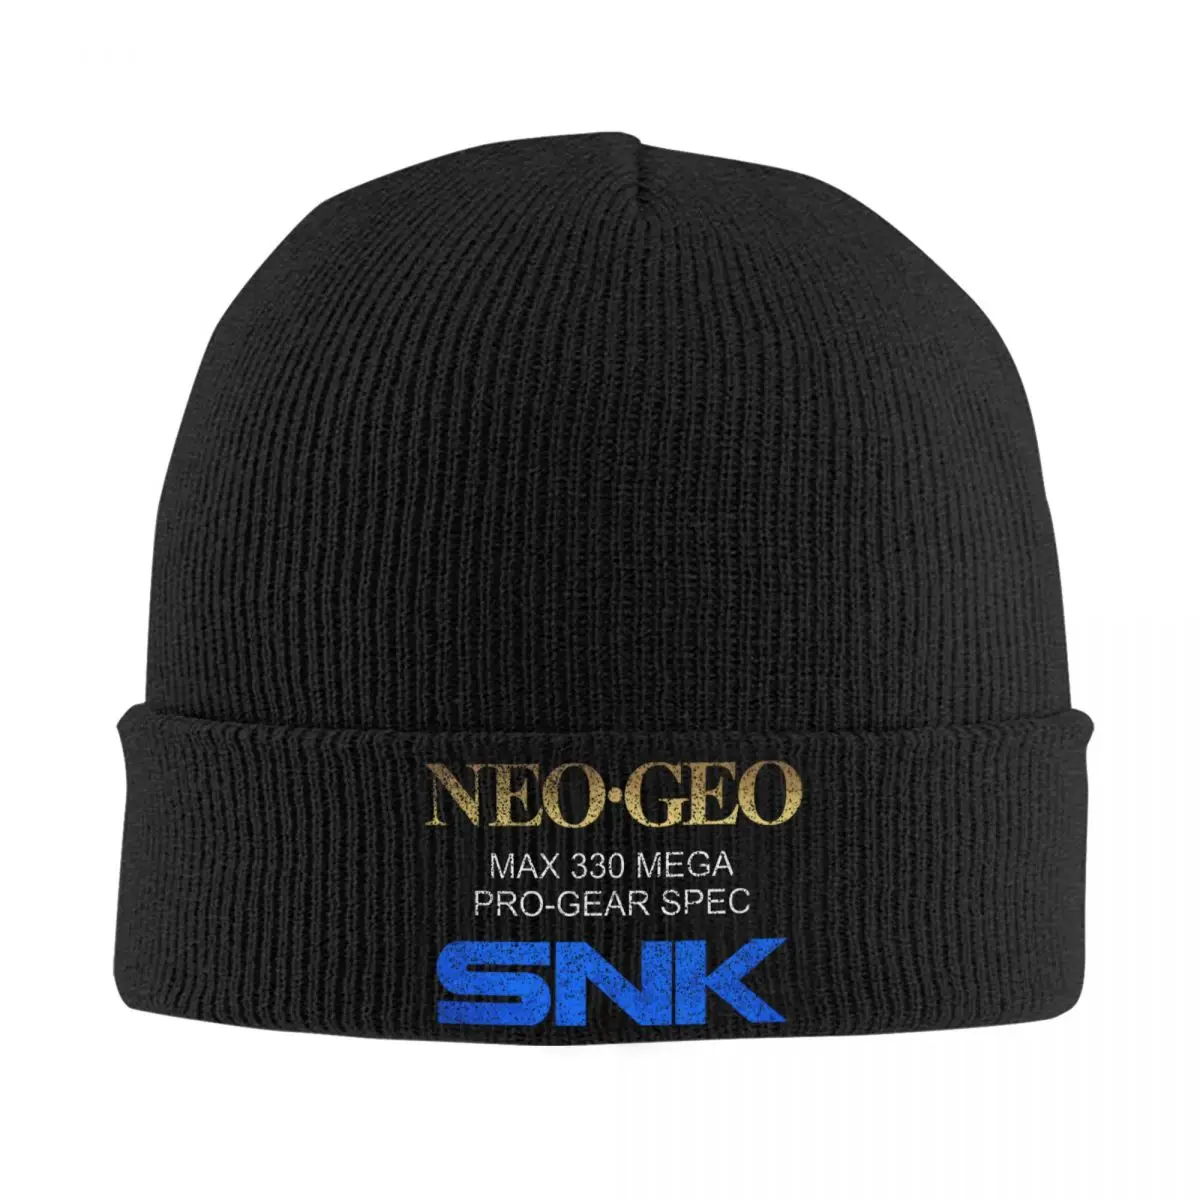 

Neo Geo Pro Gear Retro Knit Hat Beanies Autumn Winter Hats Warm Casual Snk Game Caps for Men Women